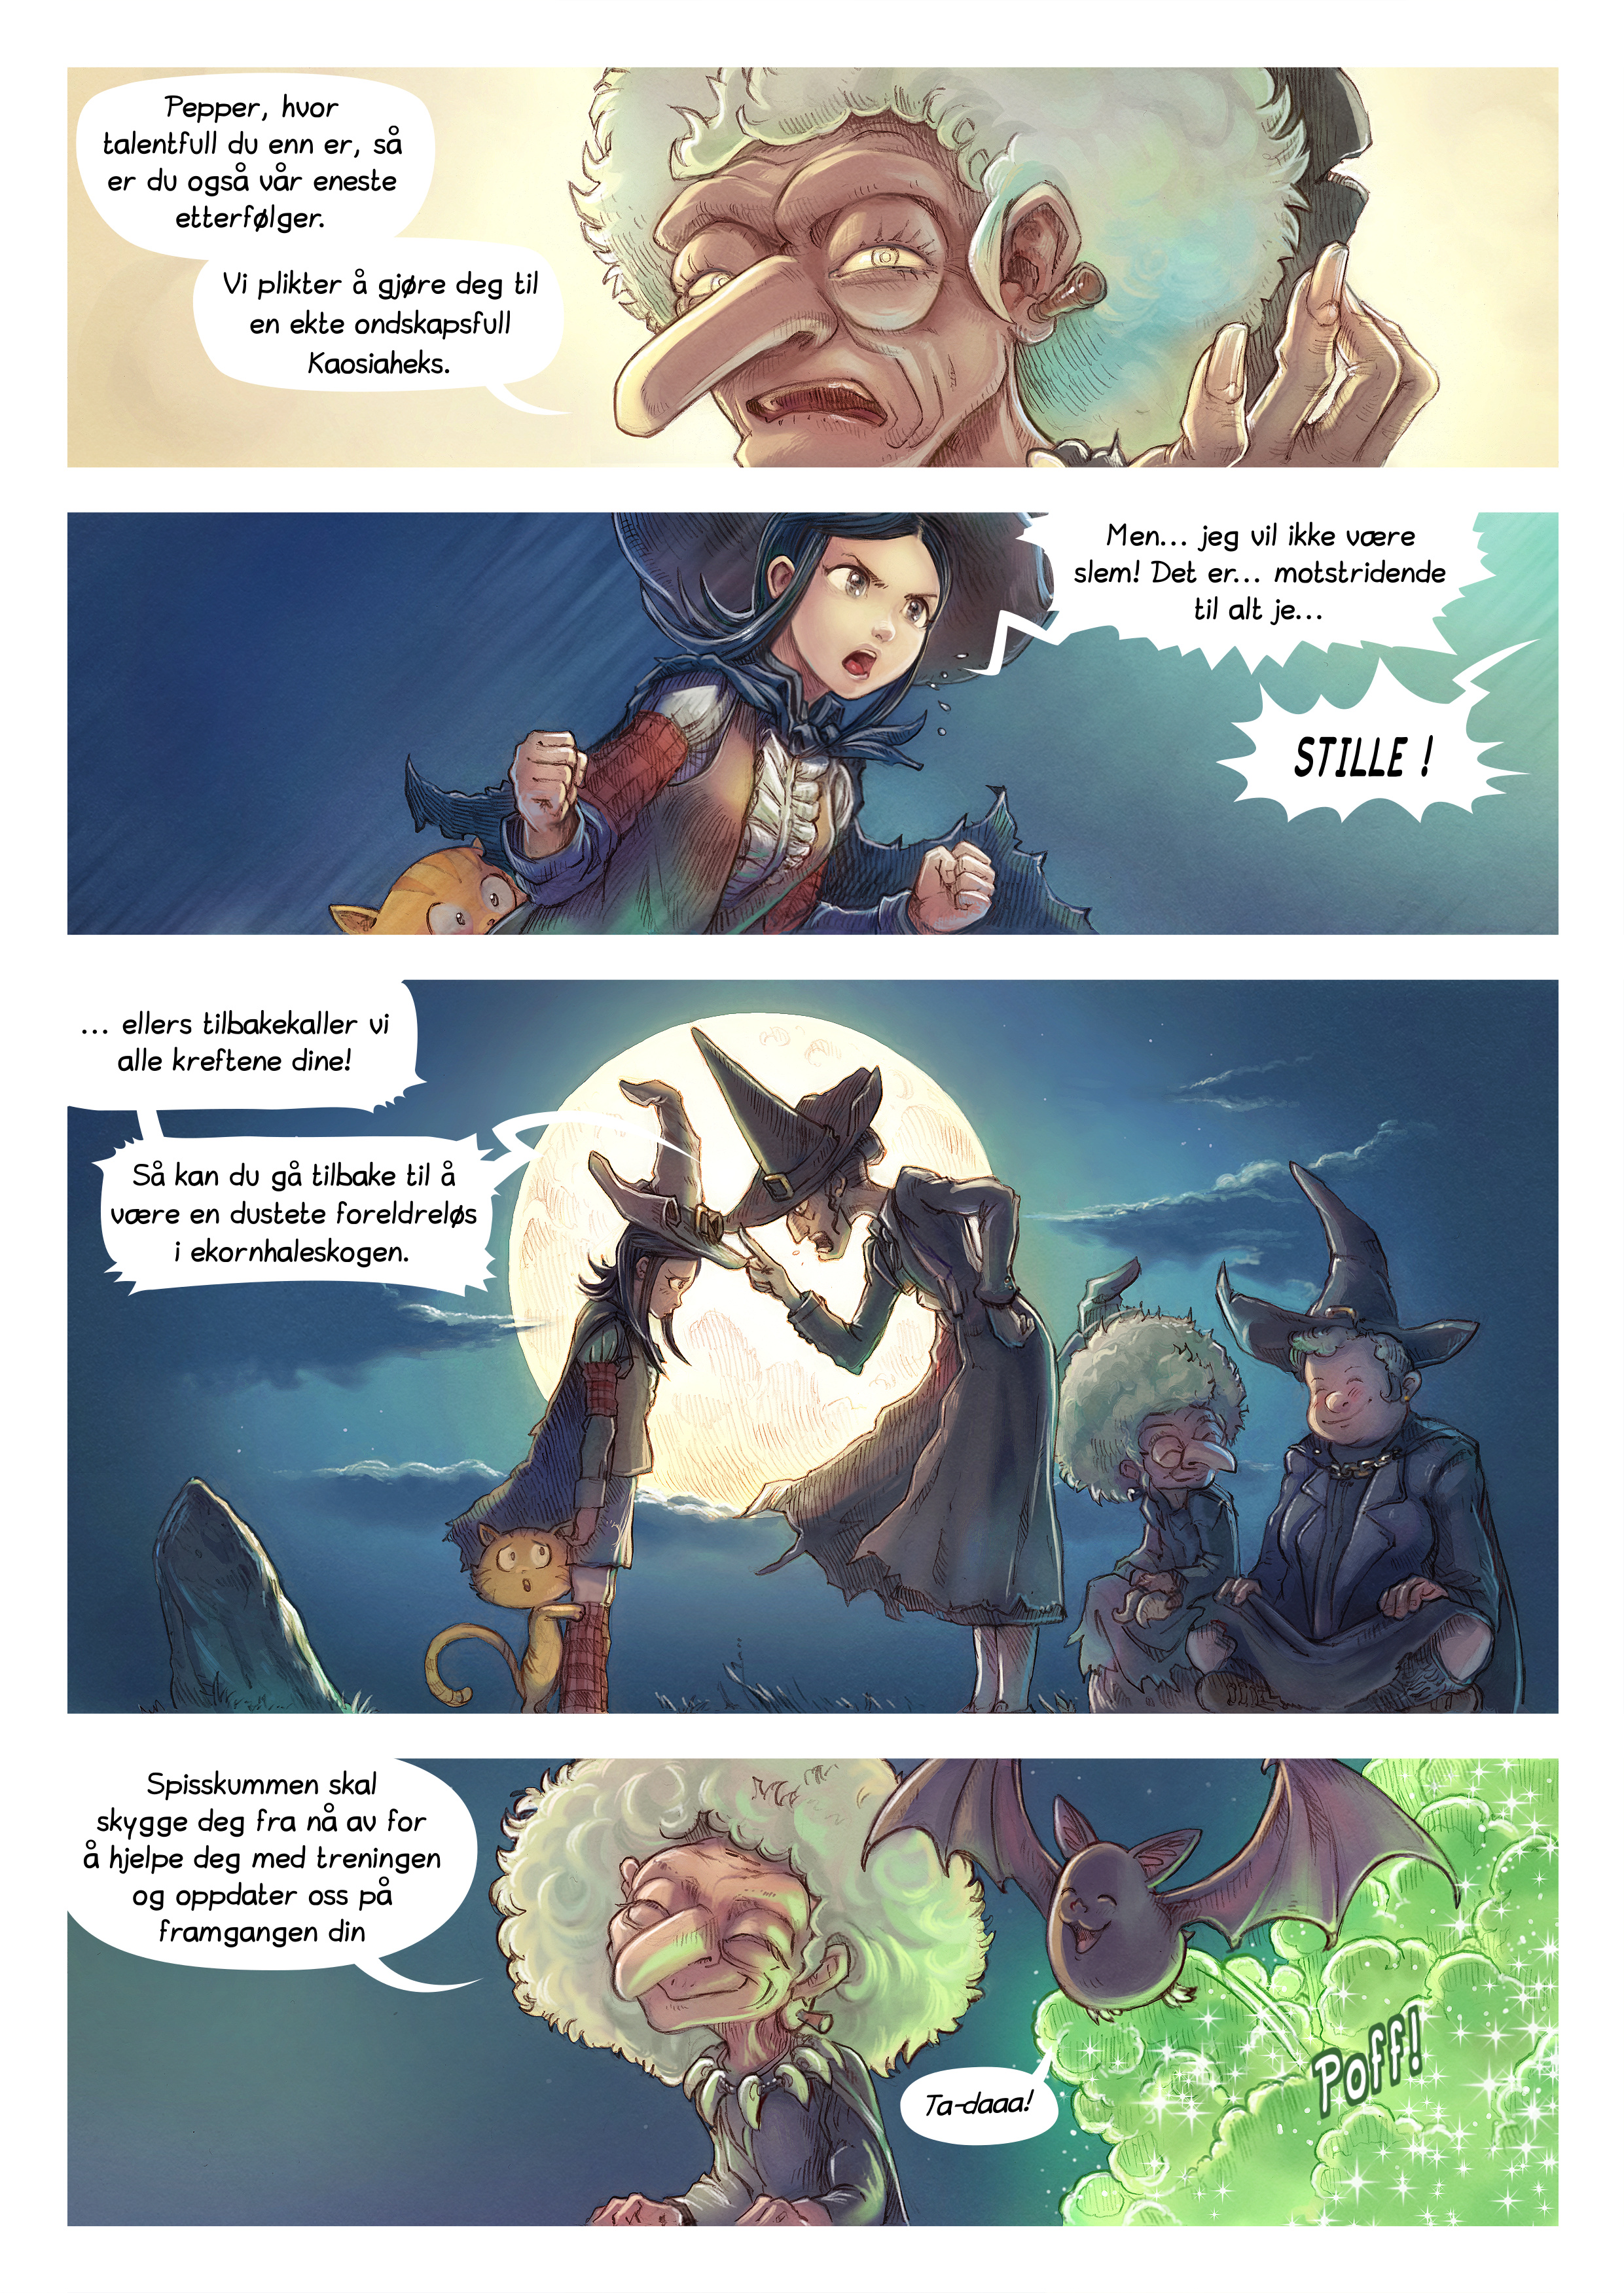 Episode 11: Kaosias hekser, Page 2